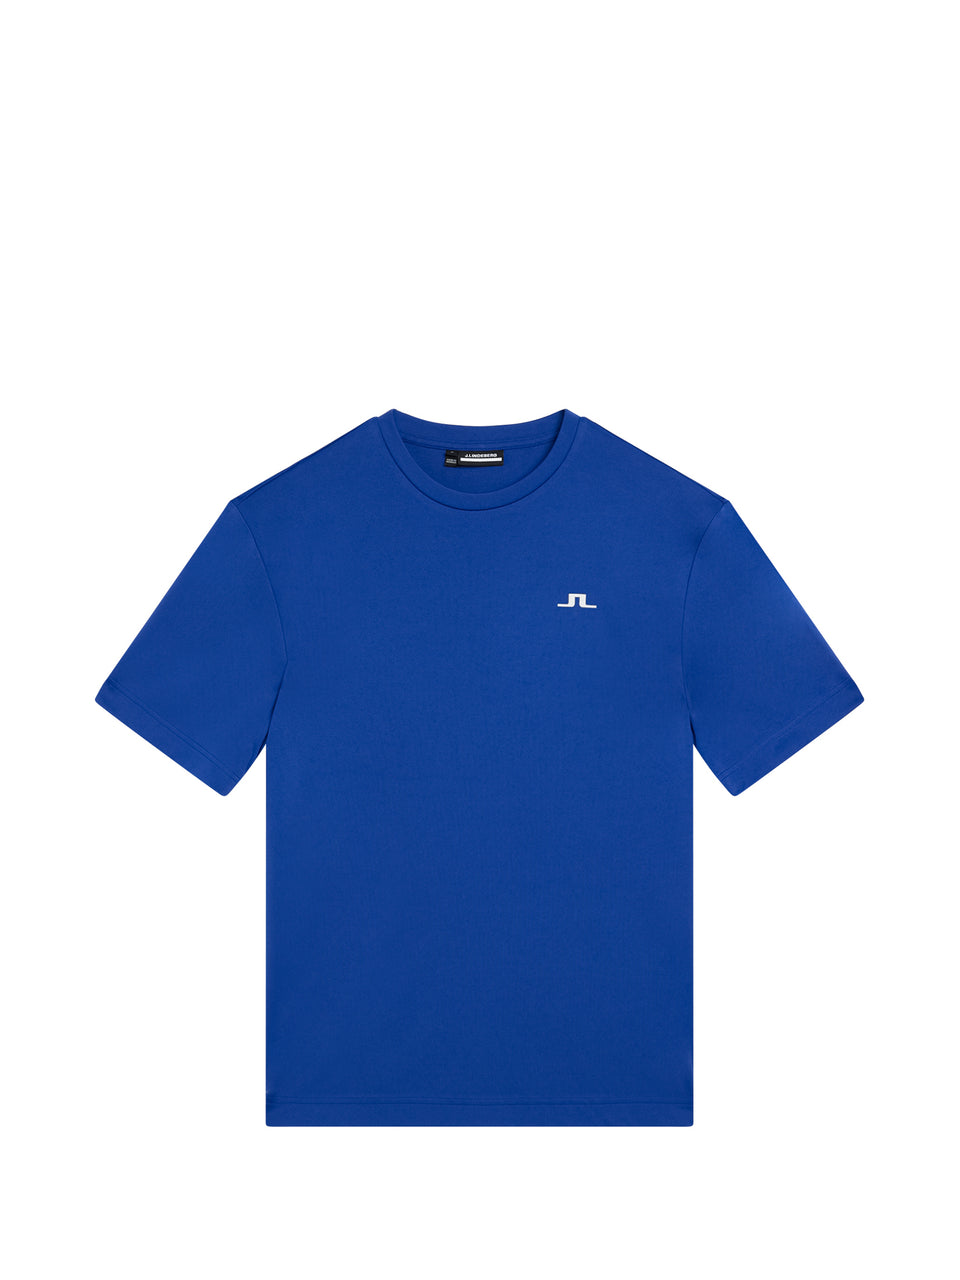 Ade T-shirt / Sodalite Blue